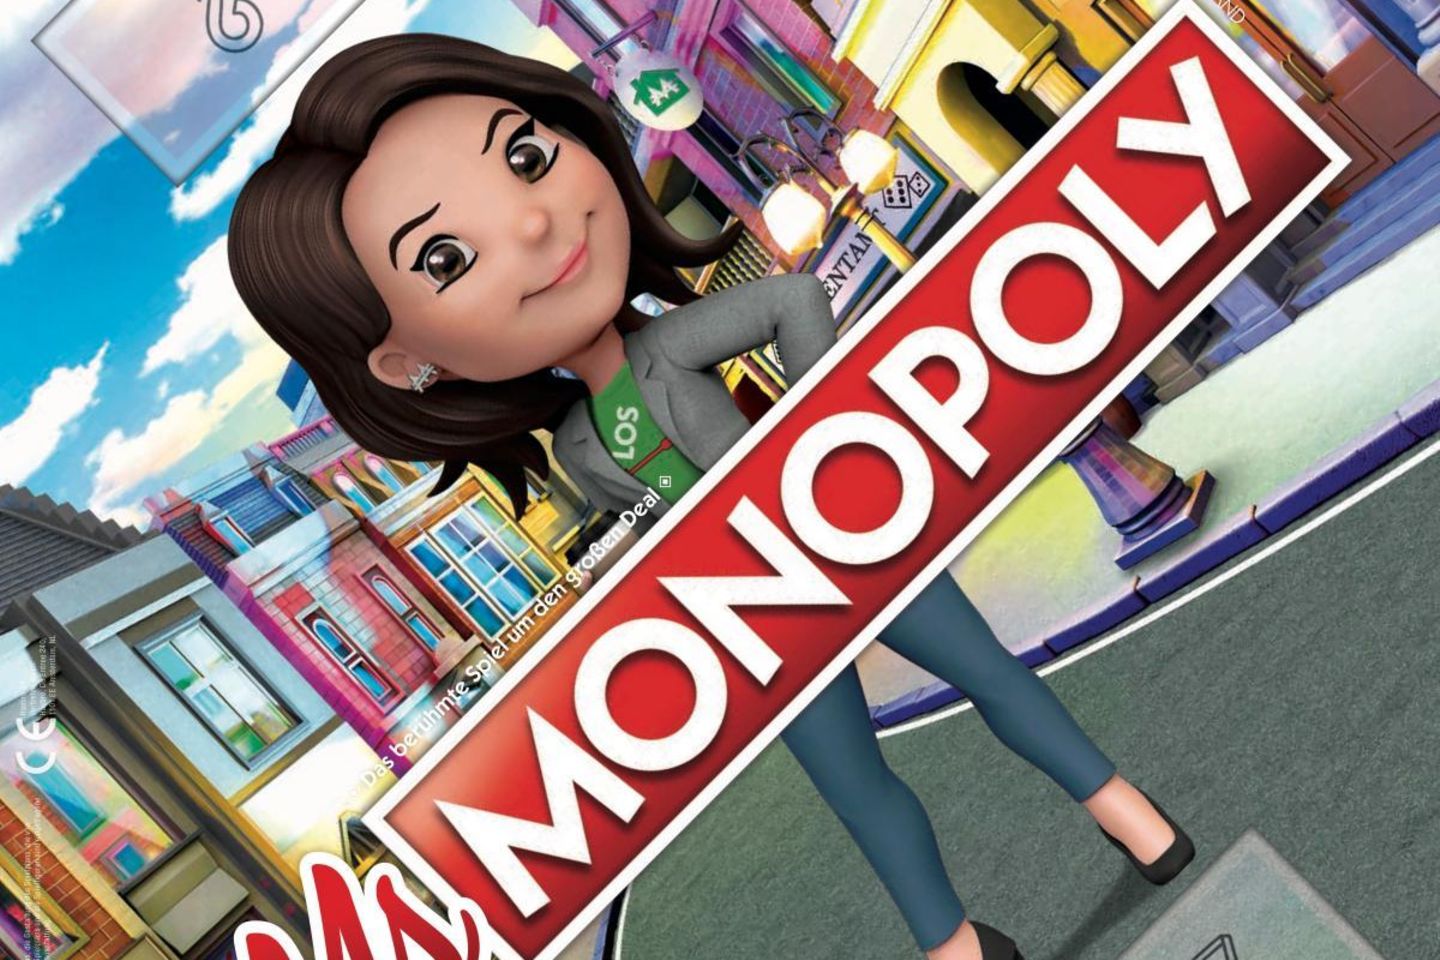 So sieht Ms Monopoly aus